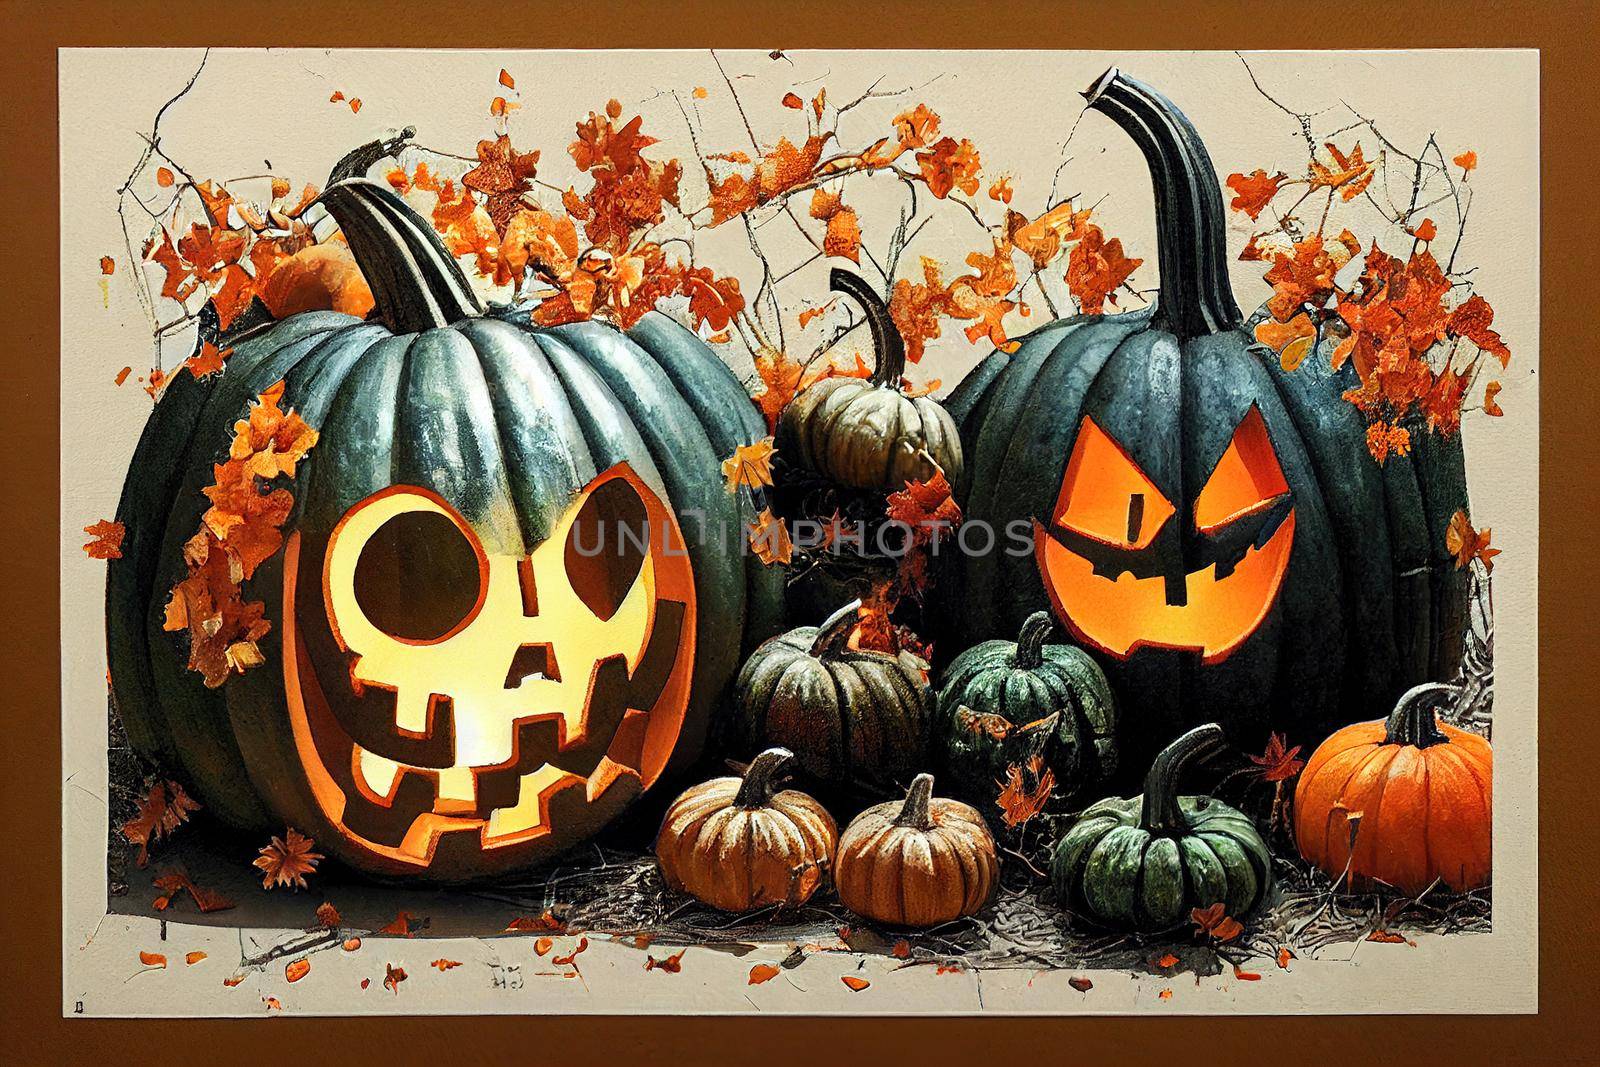 Halloween design with pumpkins . Mixed media